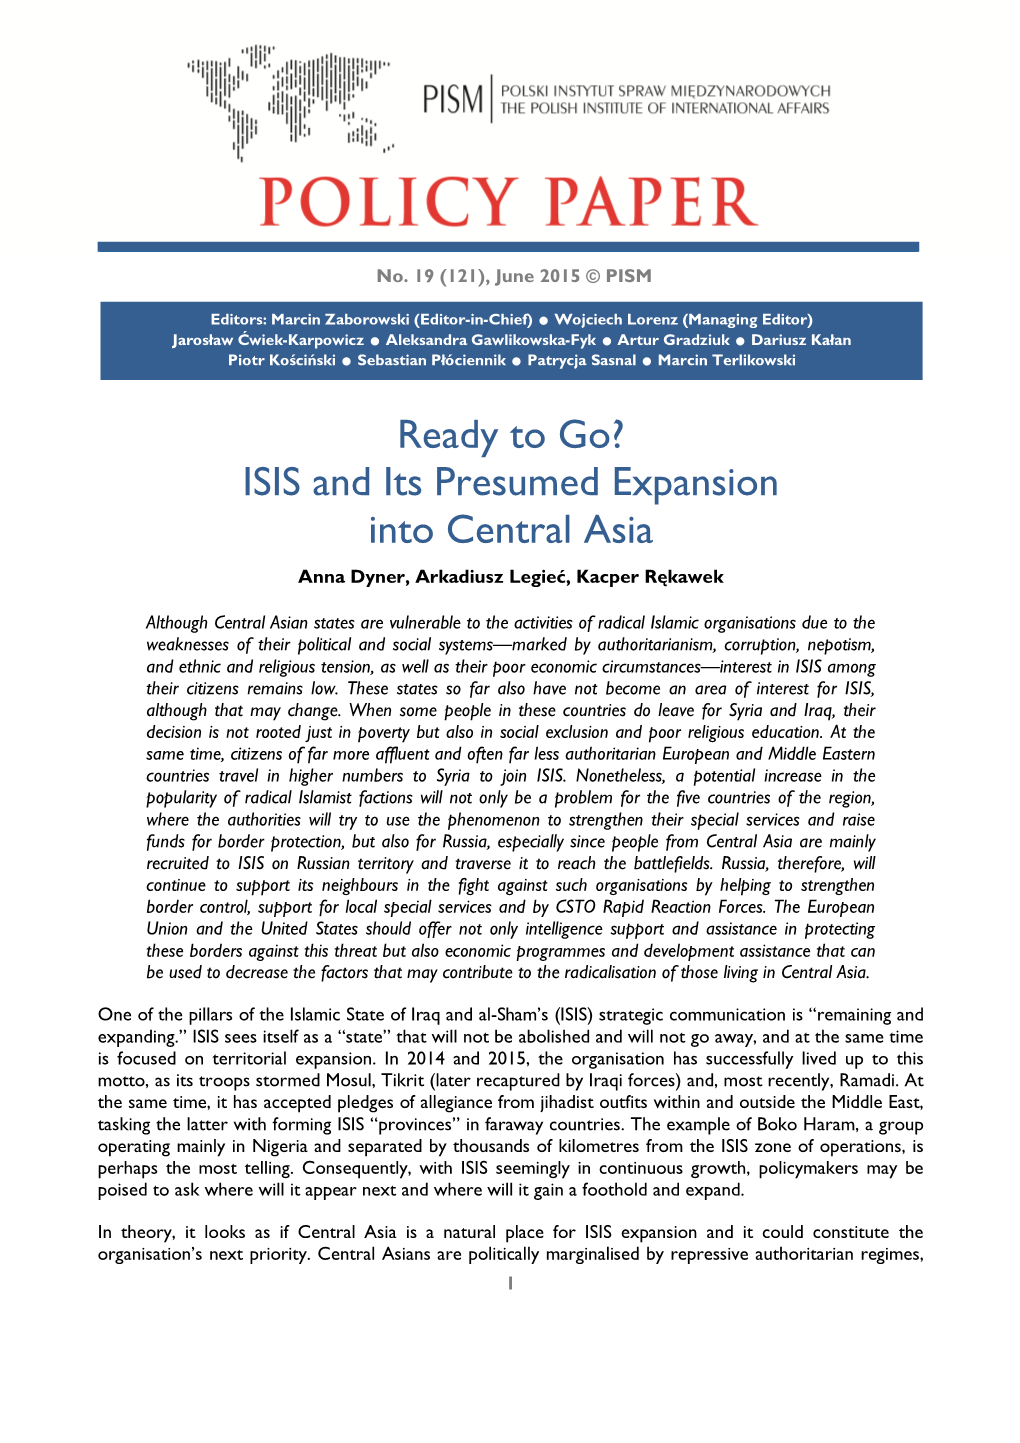 Ready to Go? ISIS and Its Presumed Expansion Into Central Asia Anna Dyner, Arkadiusz Legieć, Kacper Rękawek